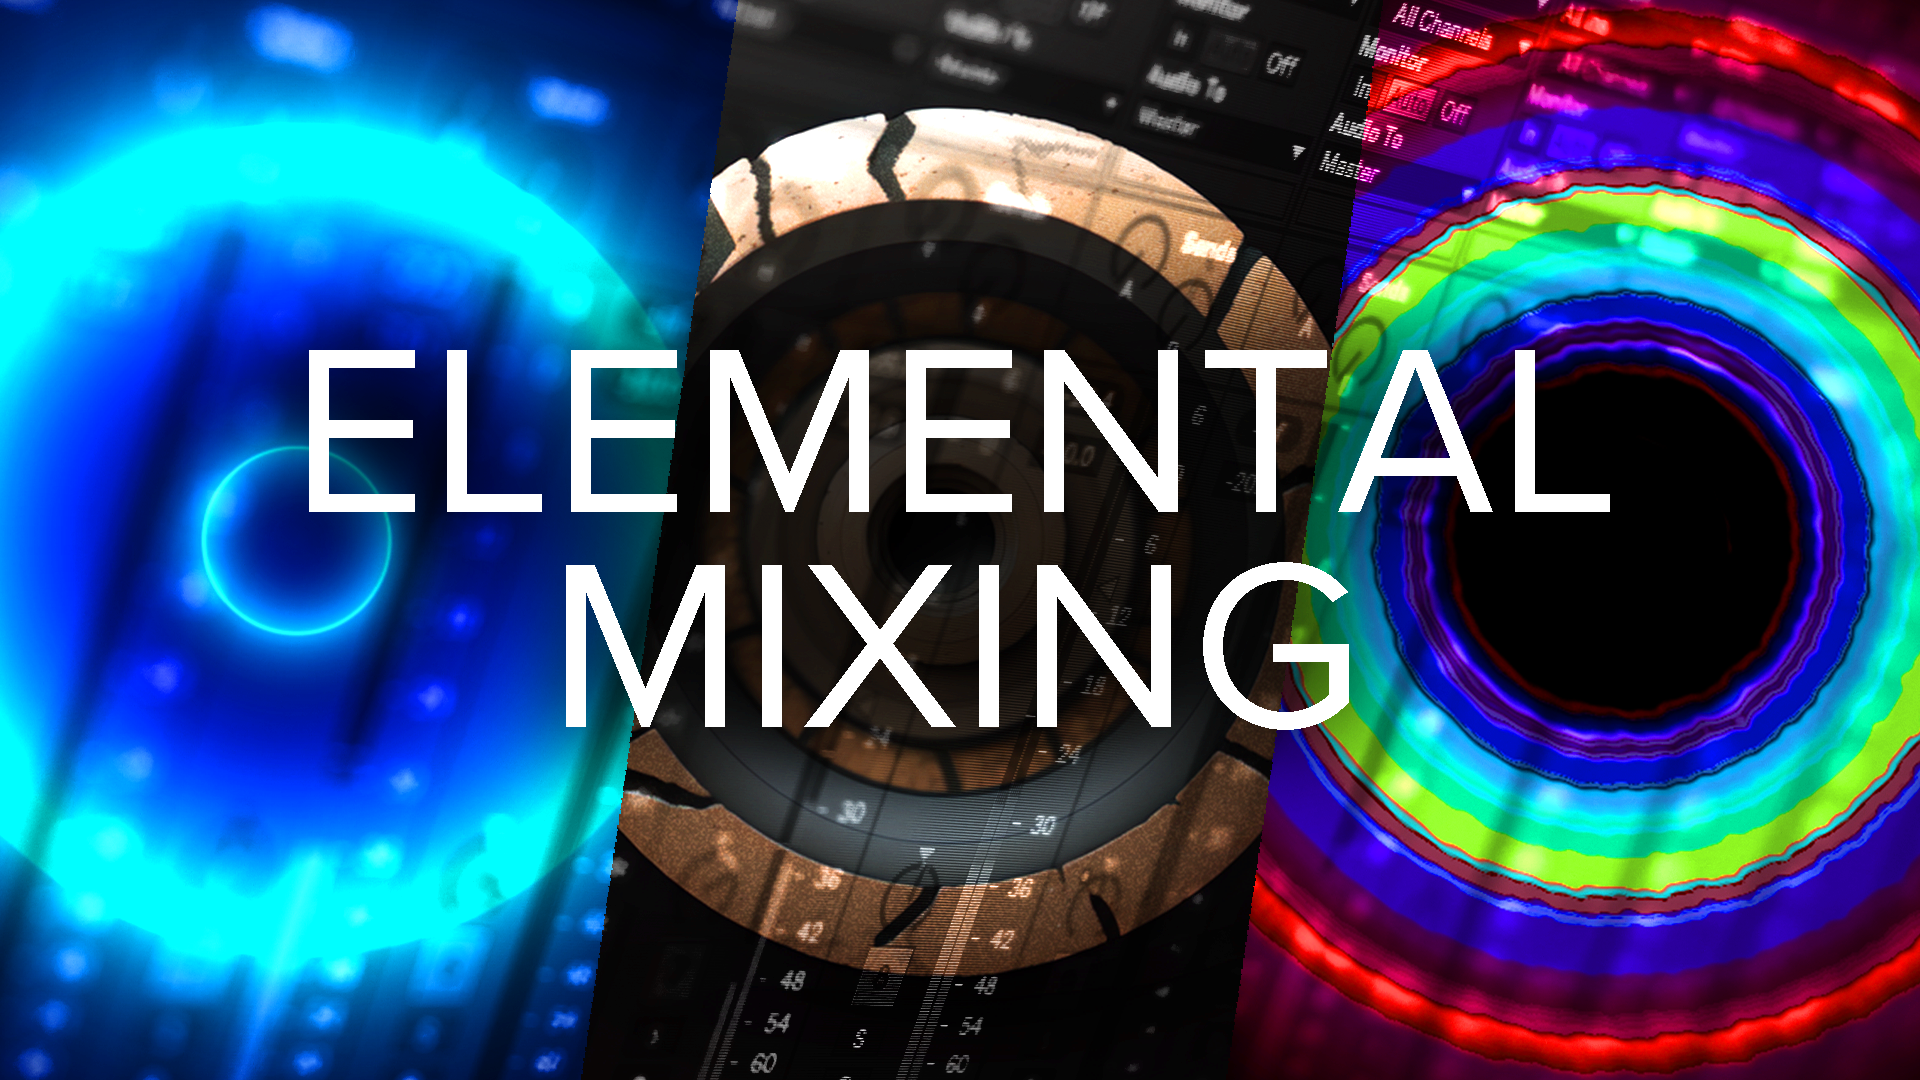 Elemental Mixing